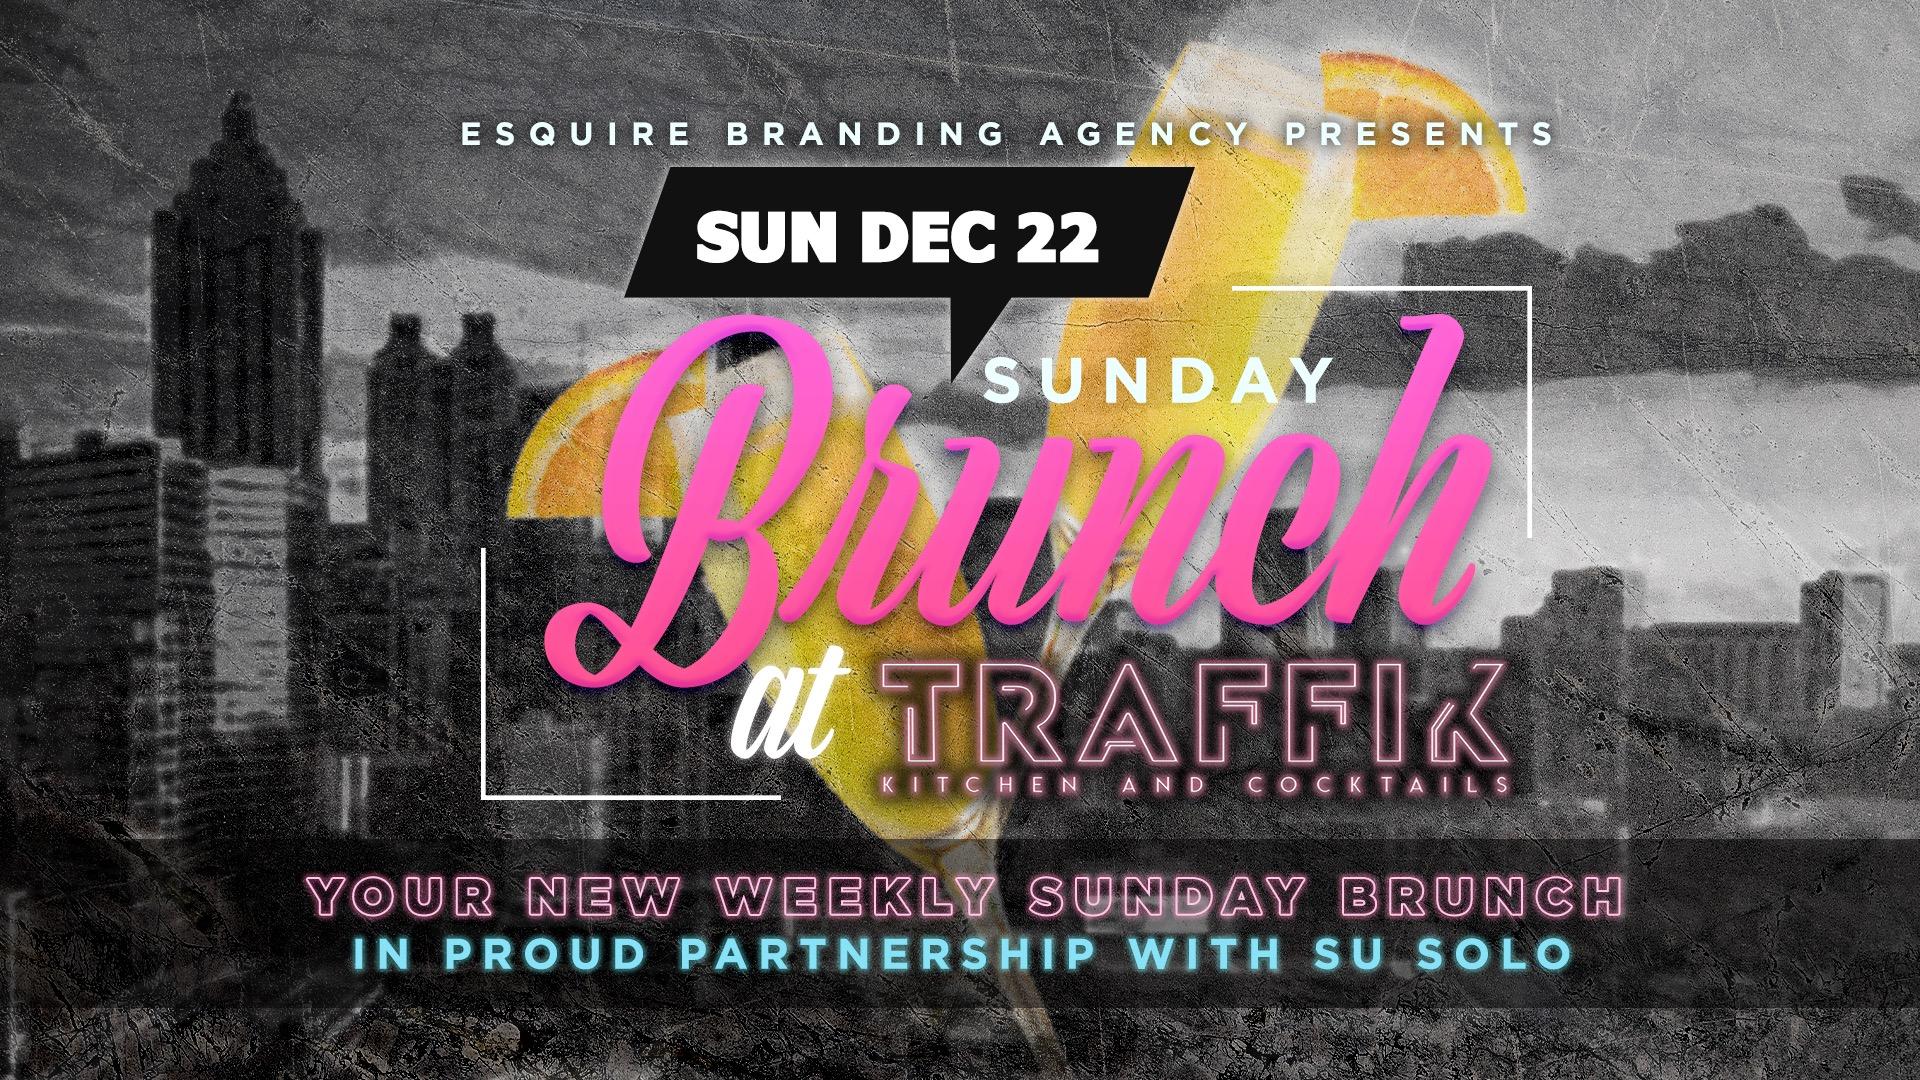 Esquire Branding Agency + Su Solo Present: Sunday Brunch at Traffik!